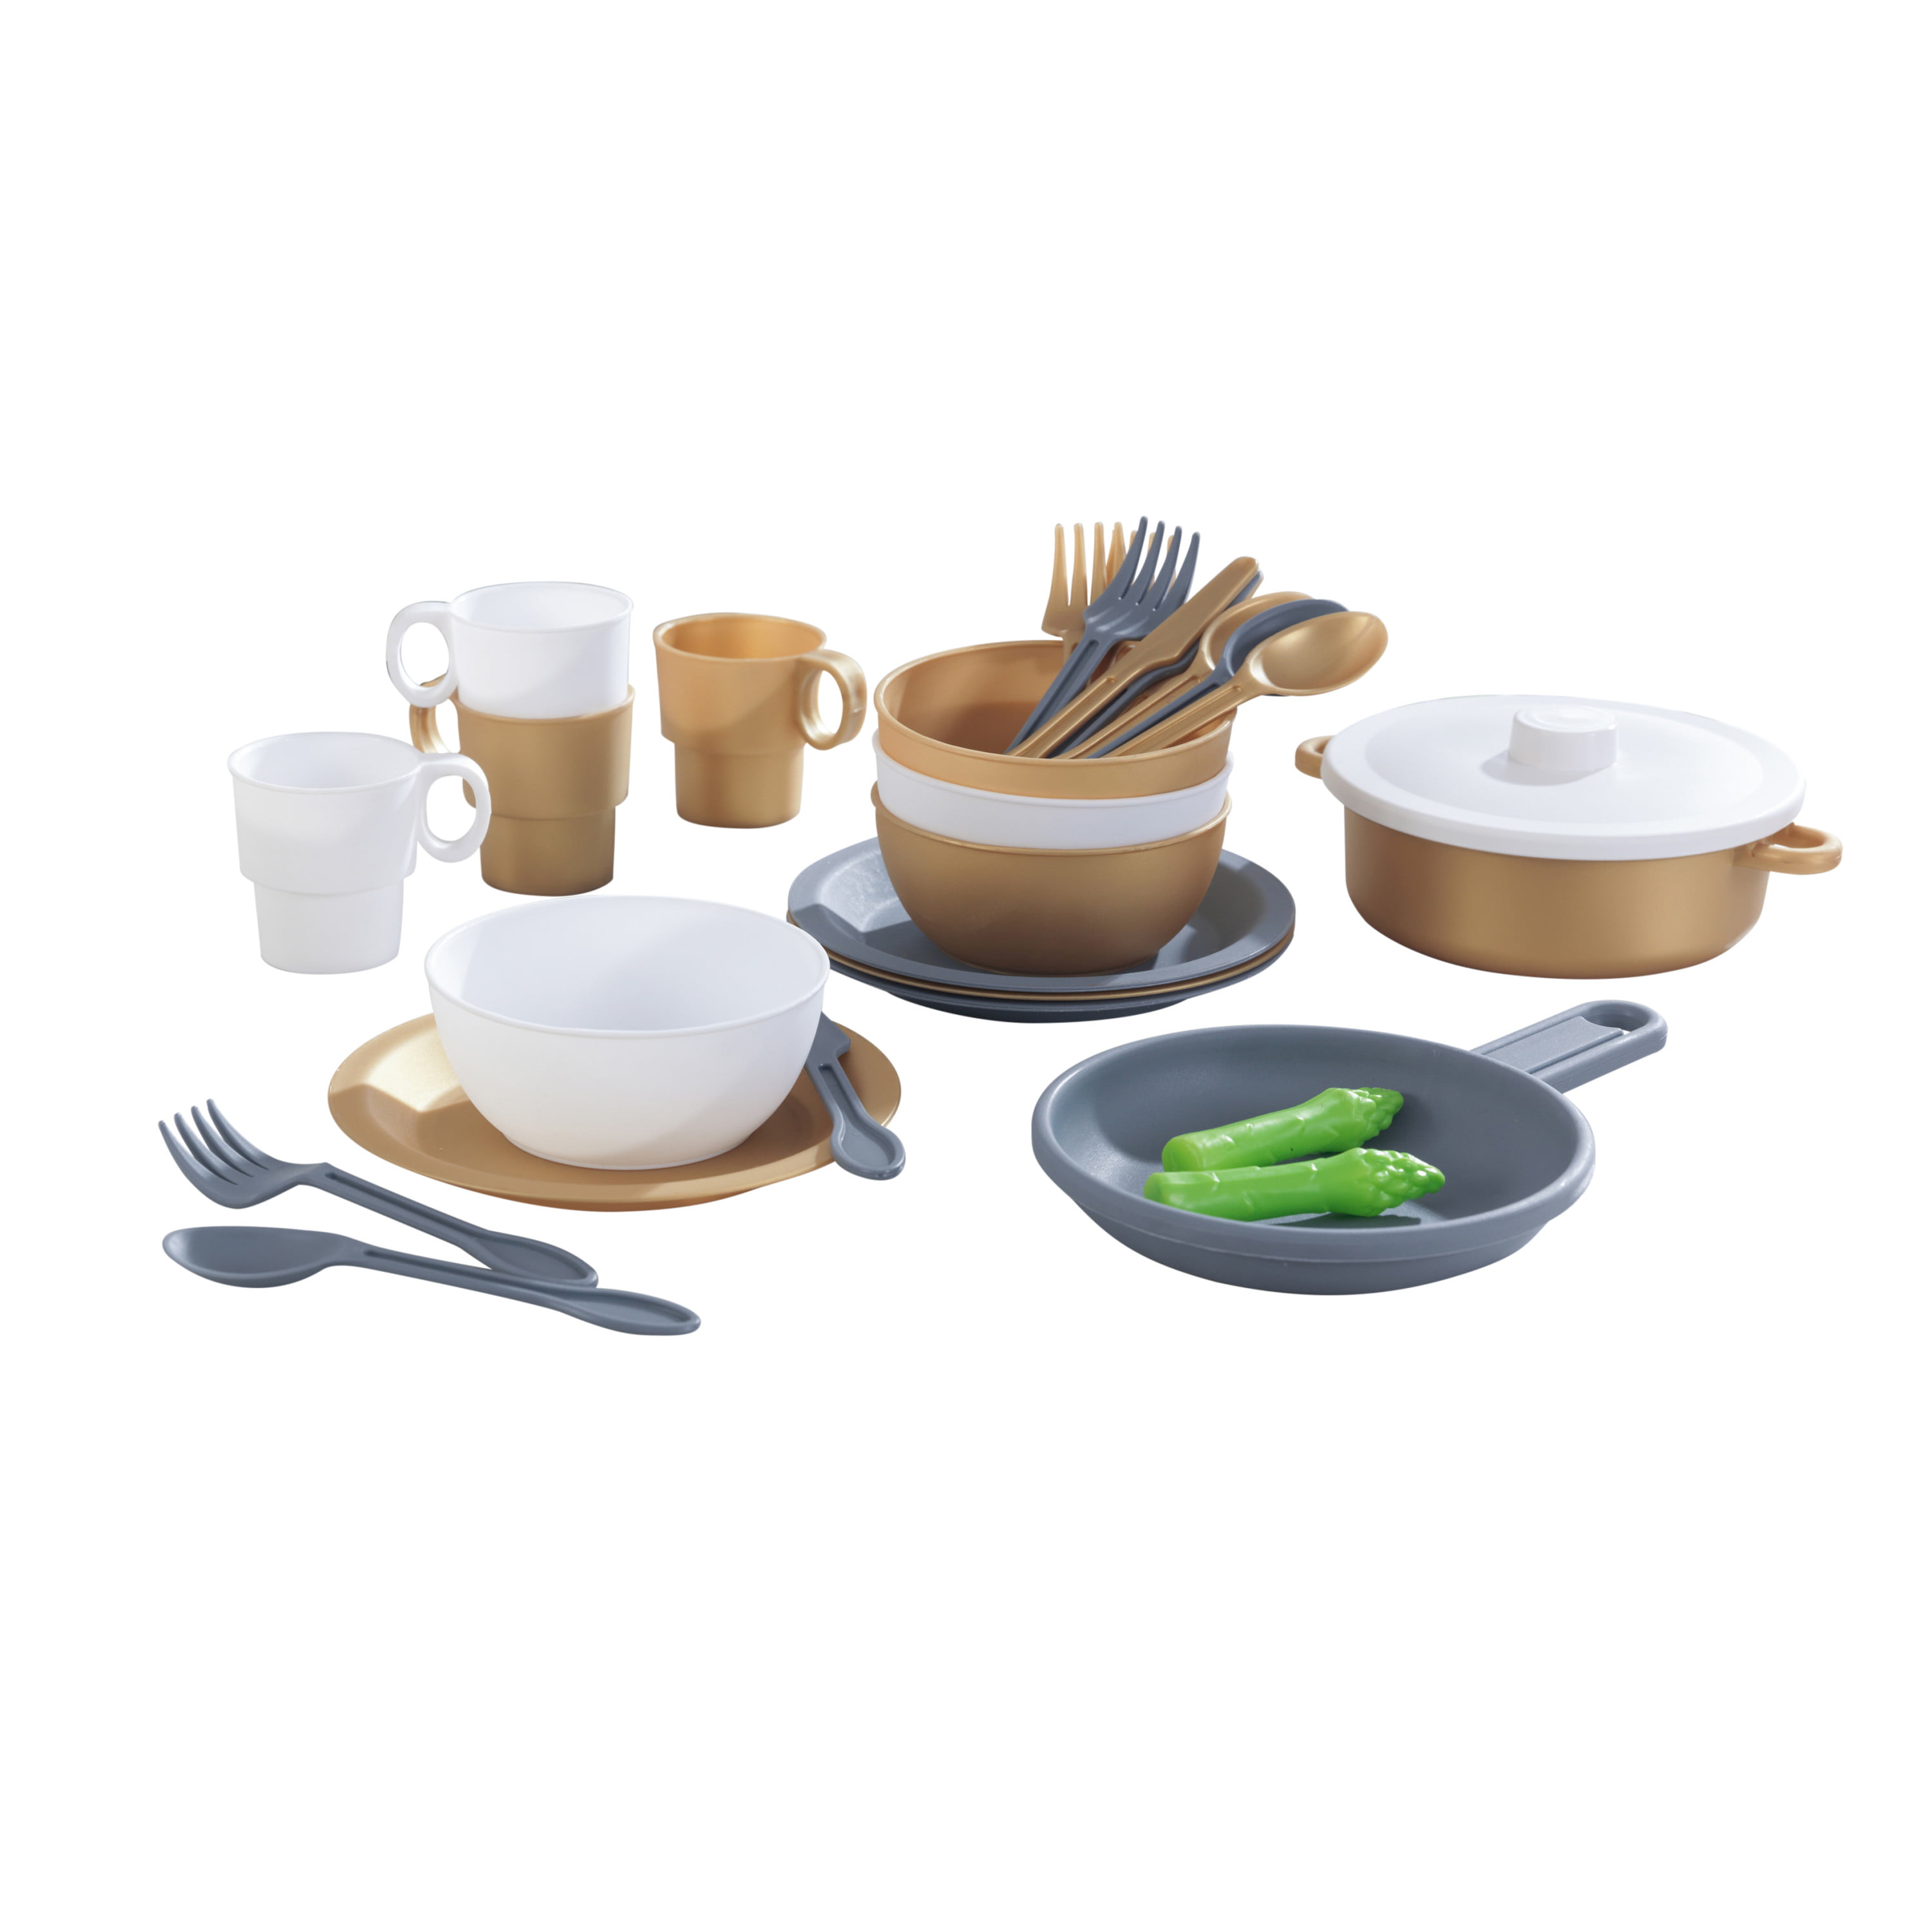 Deluxe Kochtopf Kinder+Lebensmittel-Set Küchenspielzeug 63186 KidKraft 10-tlg 